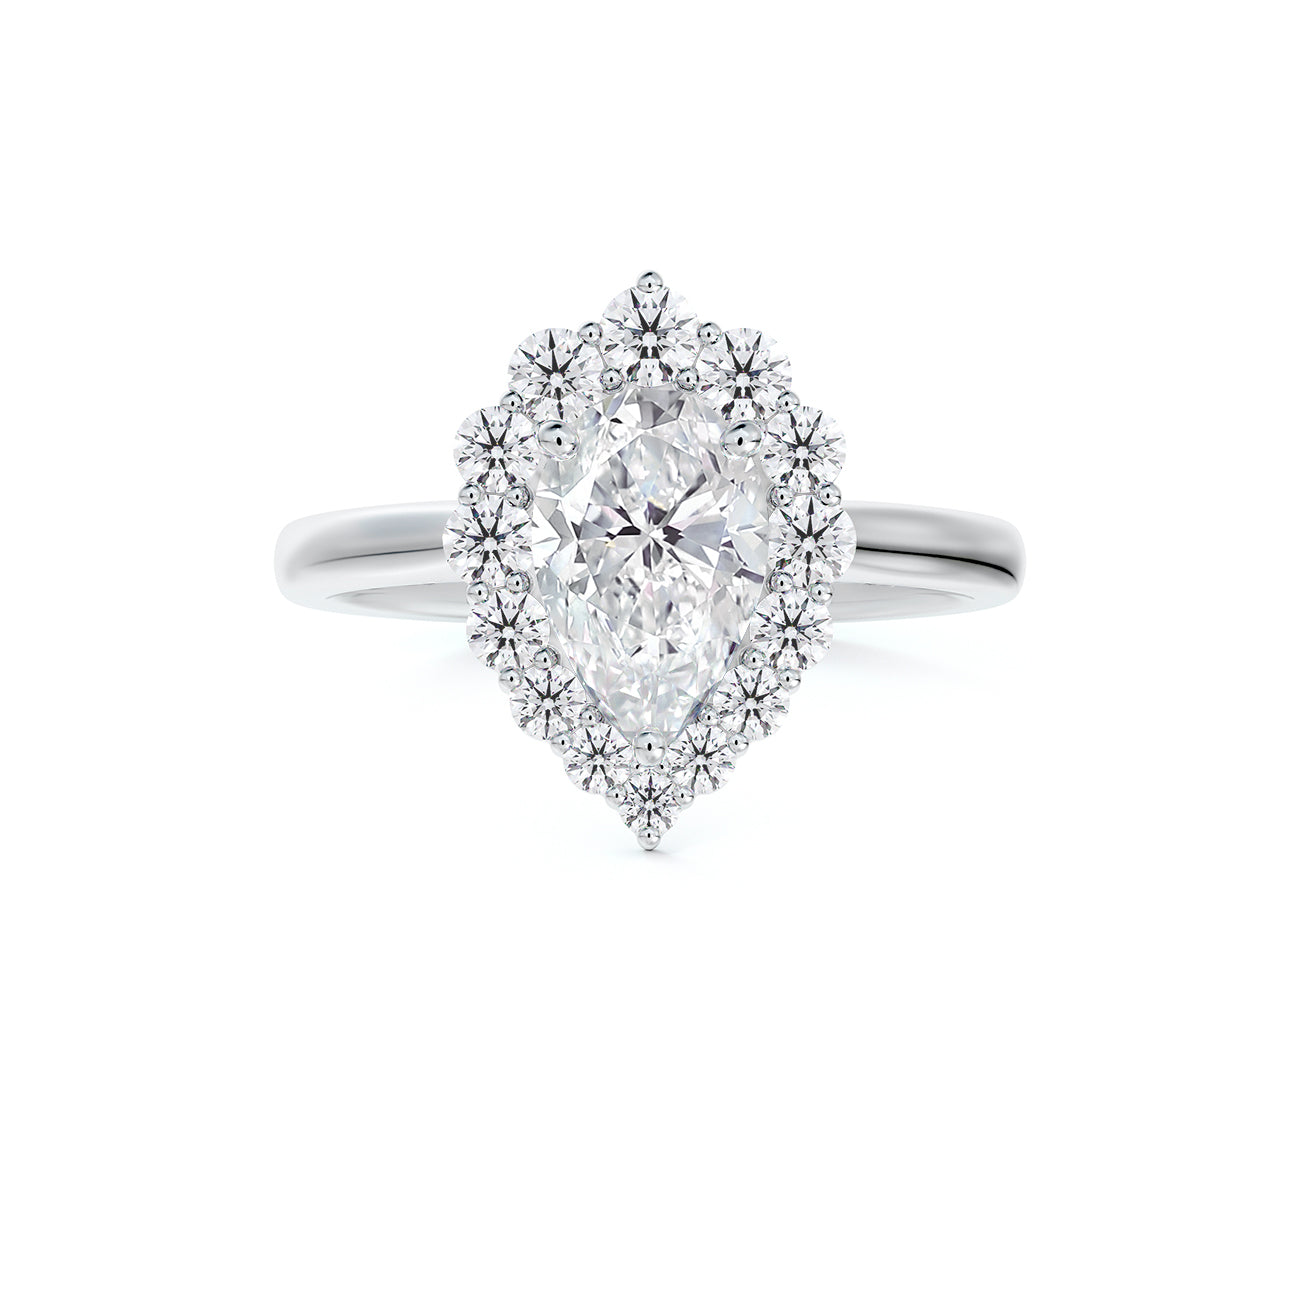 Portfolio by de Beers Forevermark Diamond Engagement Ring